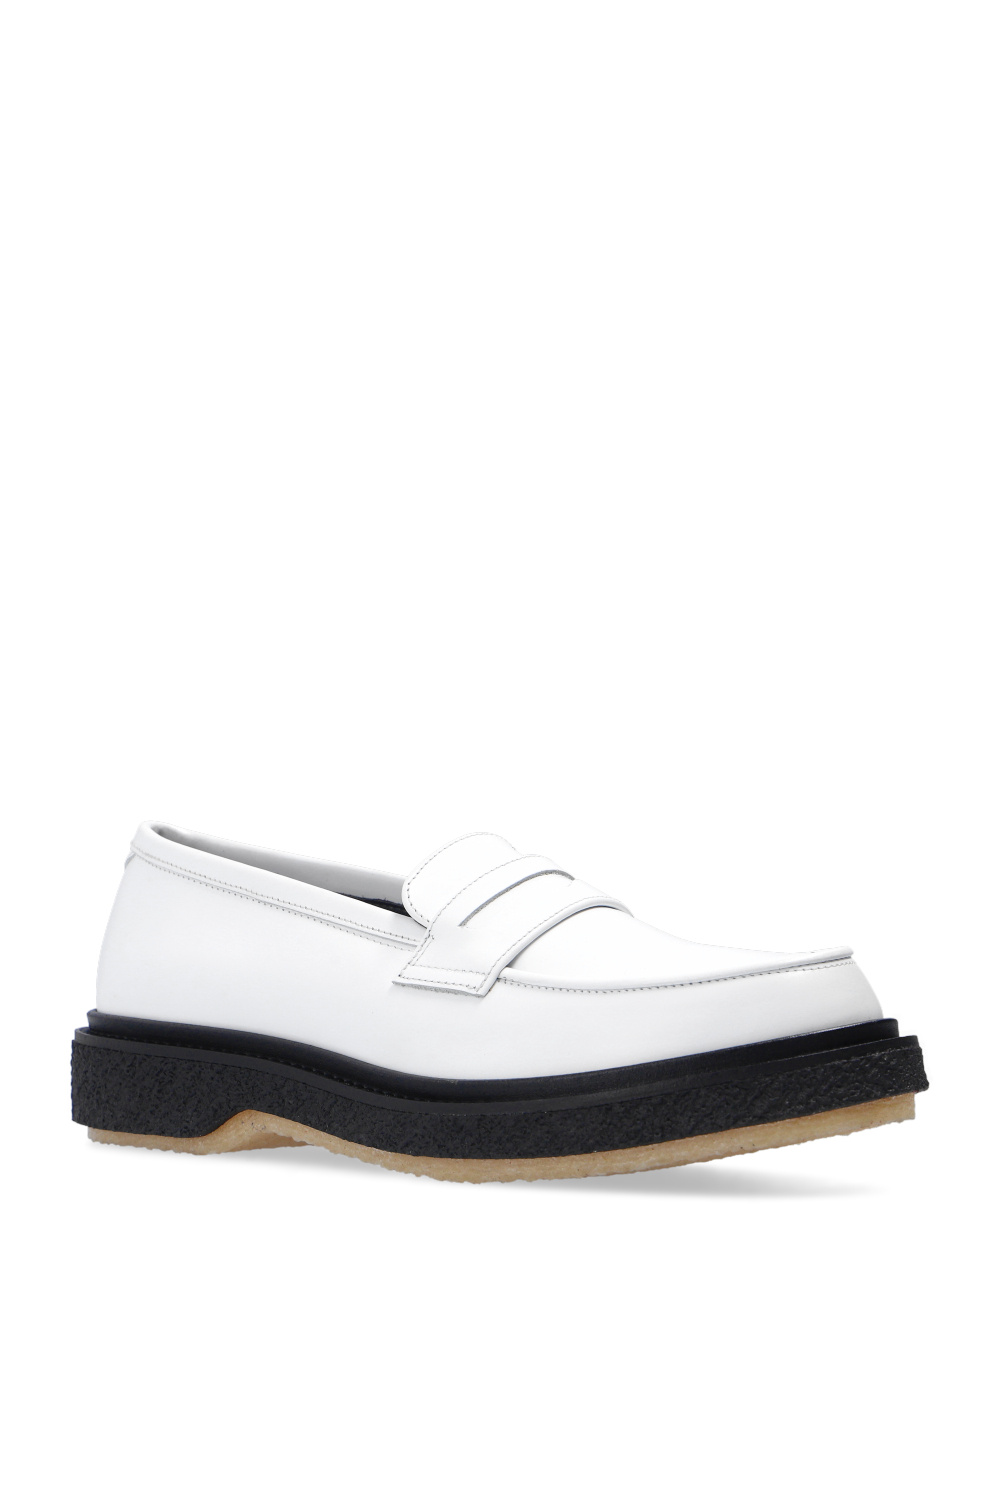 IetpShops | Adieu Paris 'Type 5' leather loafers | Women's Shoes